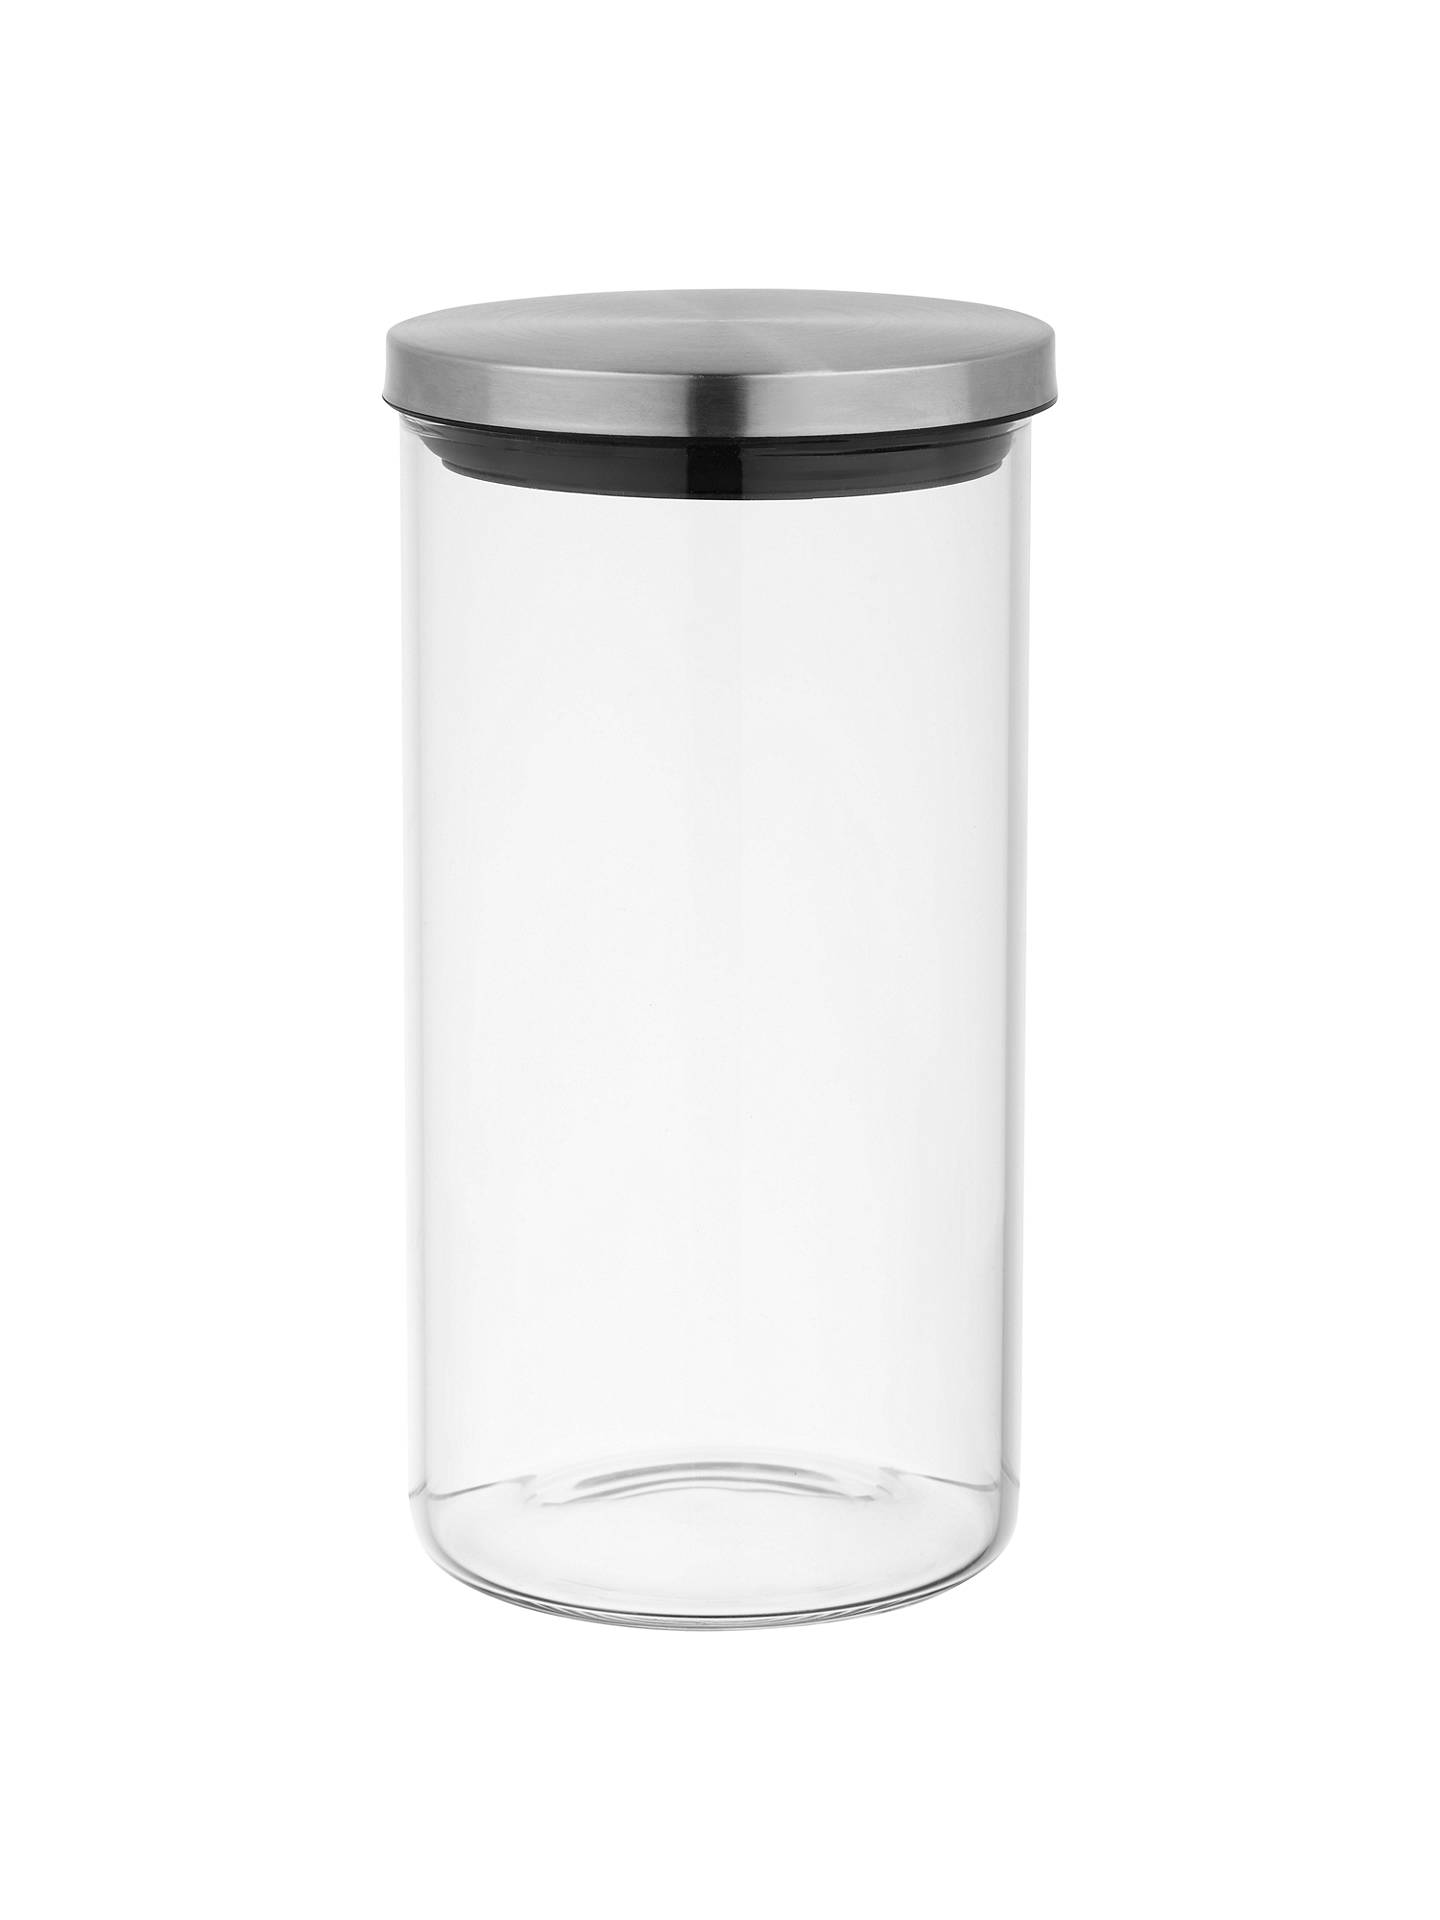 House By John Lewis Glass Storage Jar At John Lewis Partners